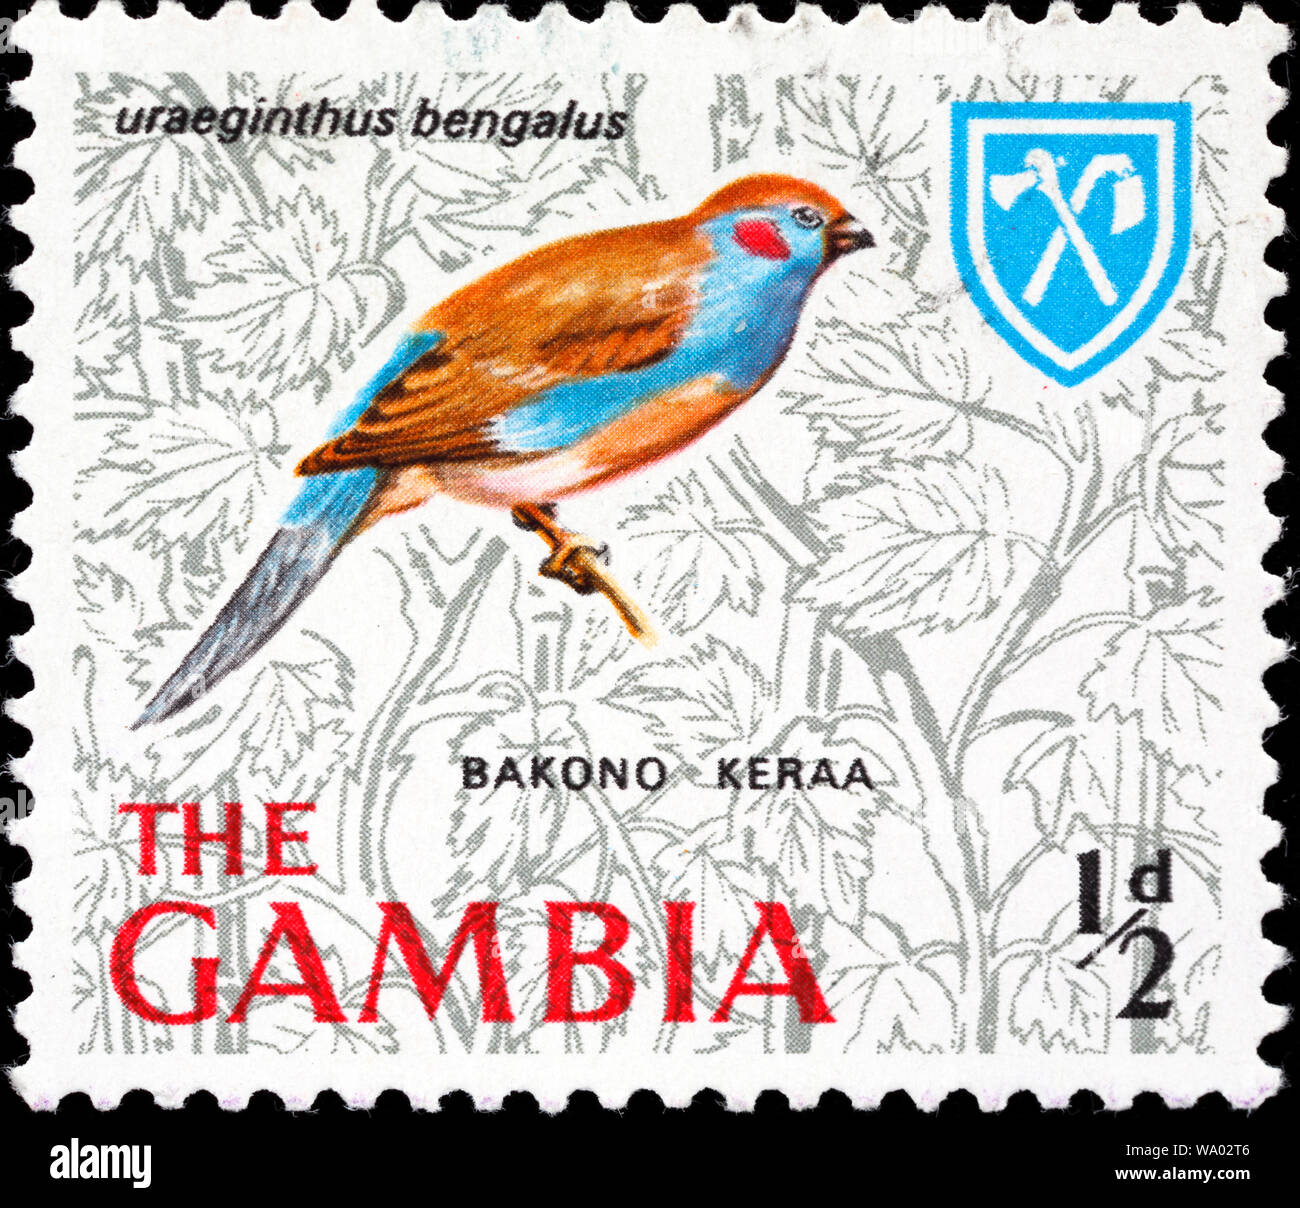 Red-cheeked Cordon-bleu, Bakono Keraa, Uraeginthus bengalus, postage stamp, Gambia, 1966 Stock Photo